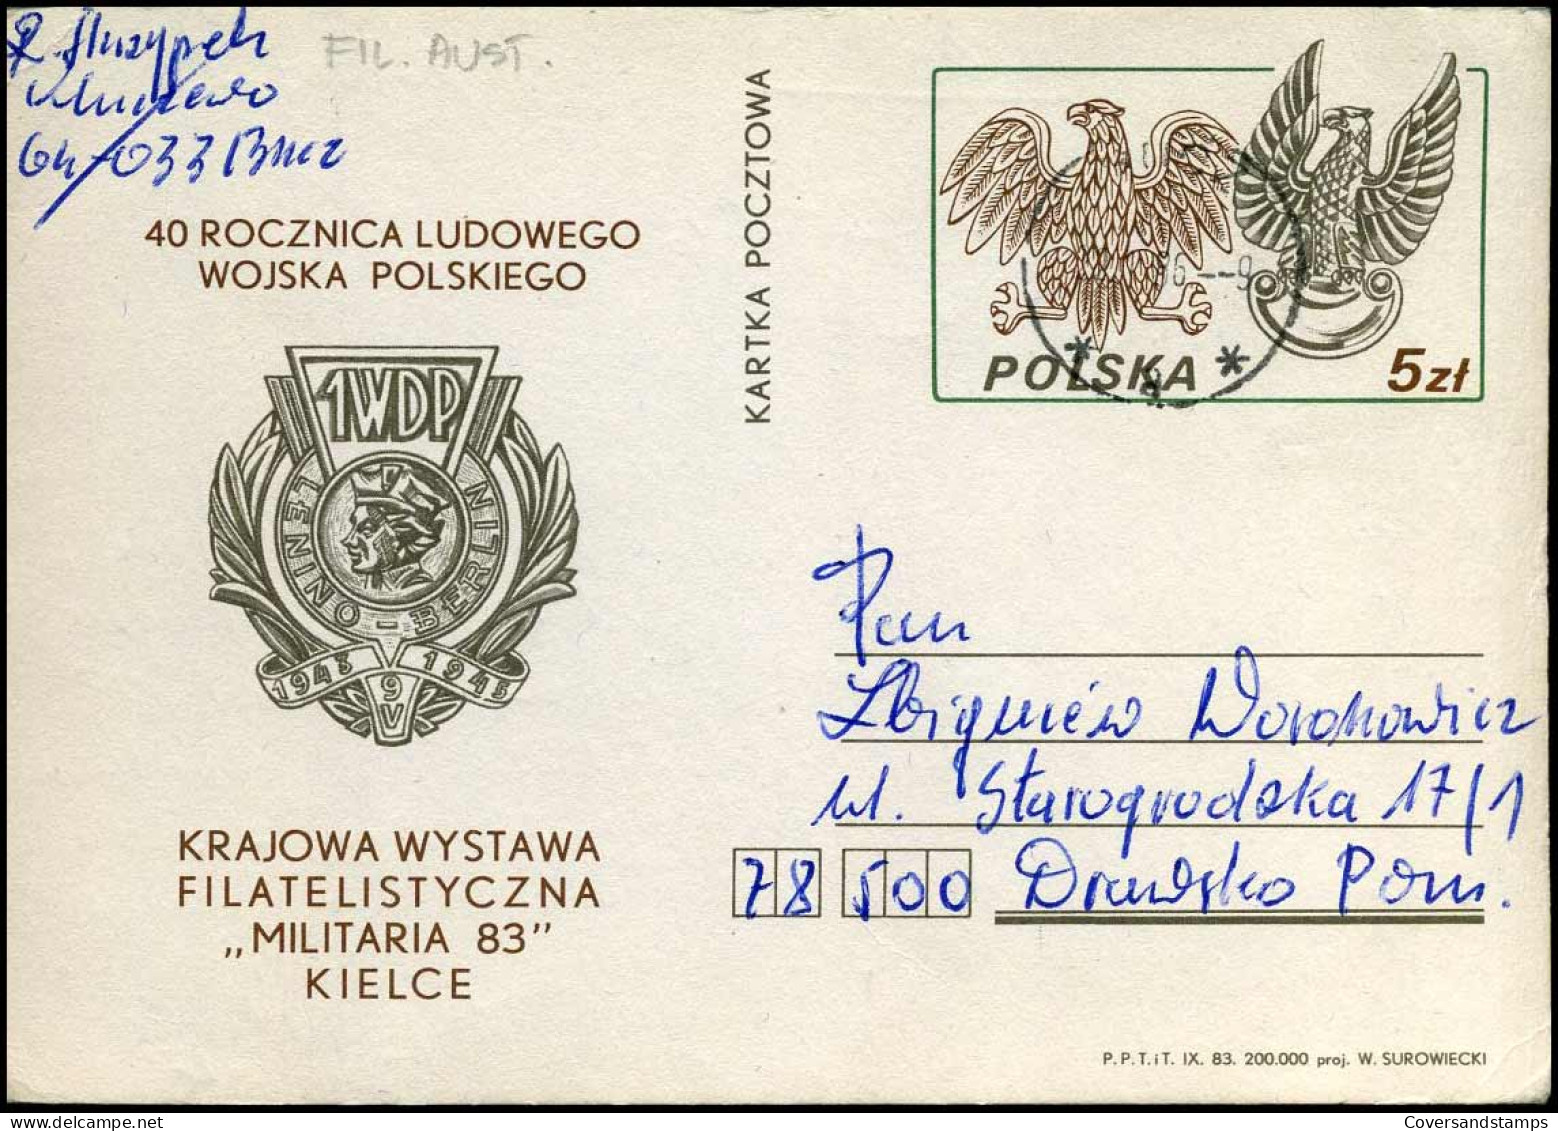 Postcard - Storia Postale